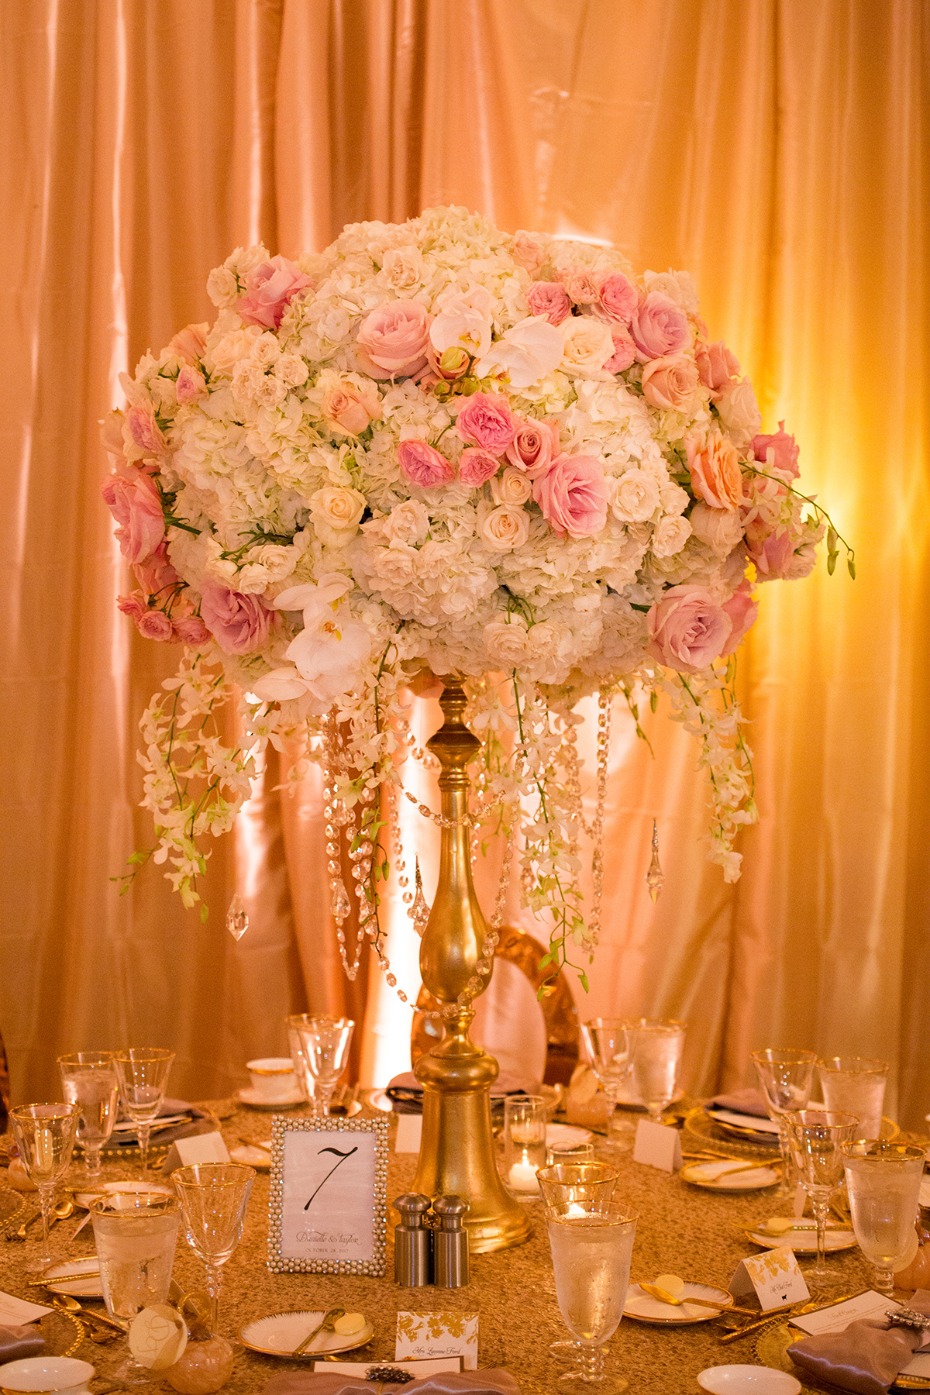 Glamorous floral centerpiece